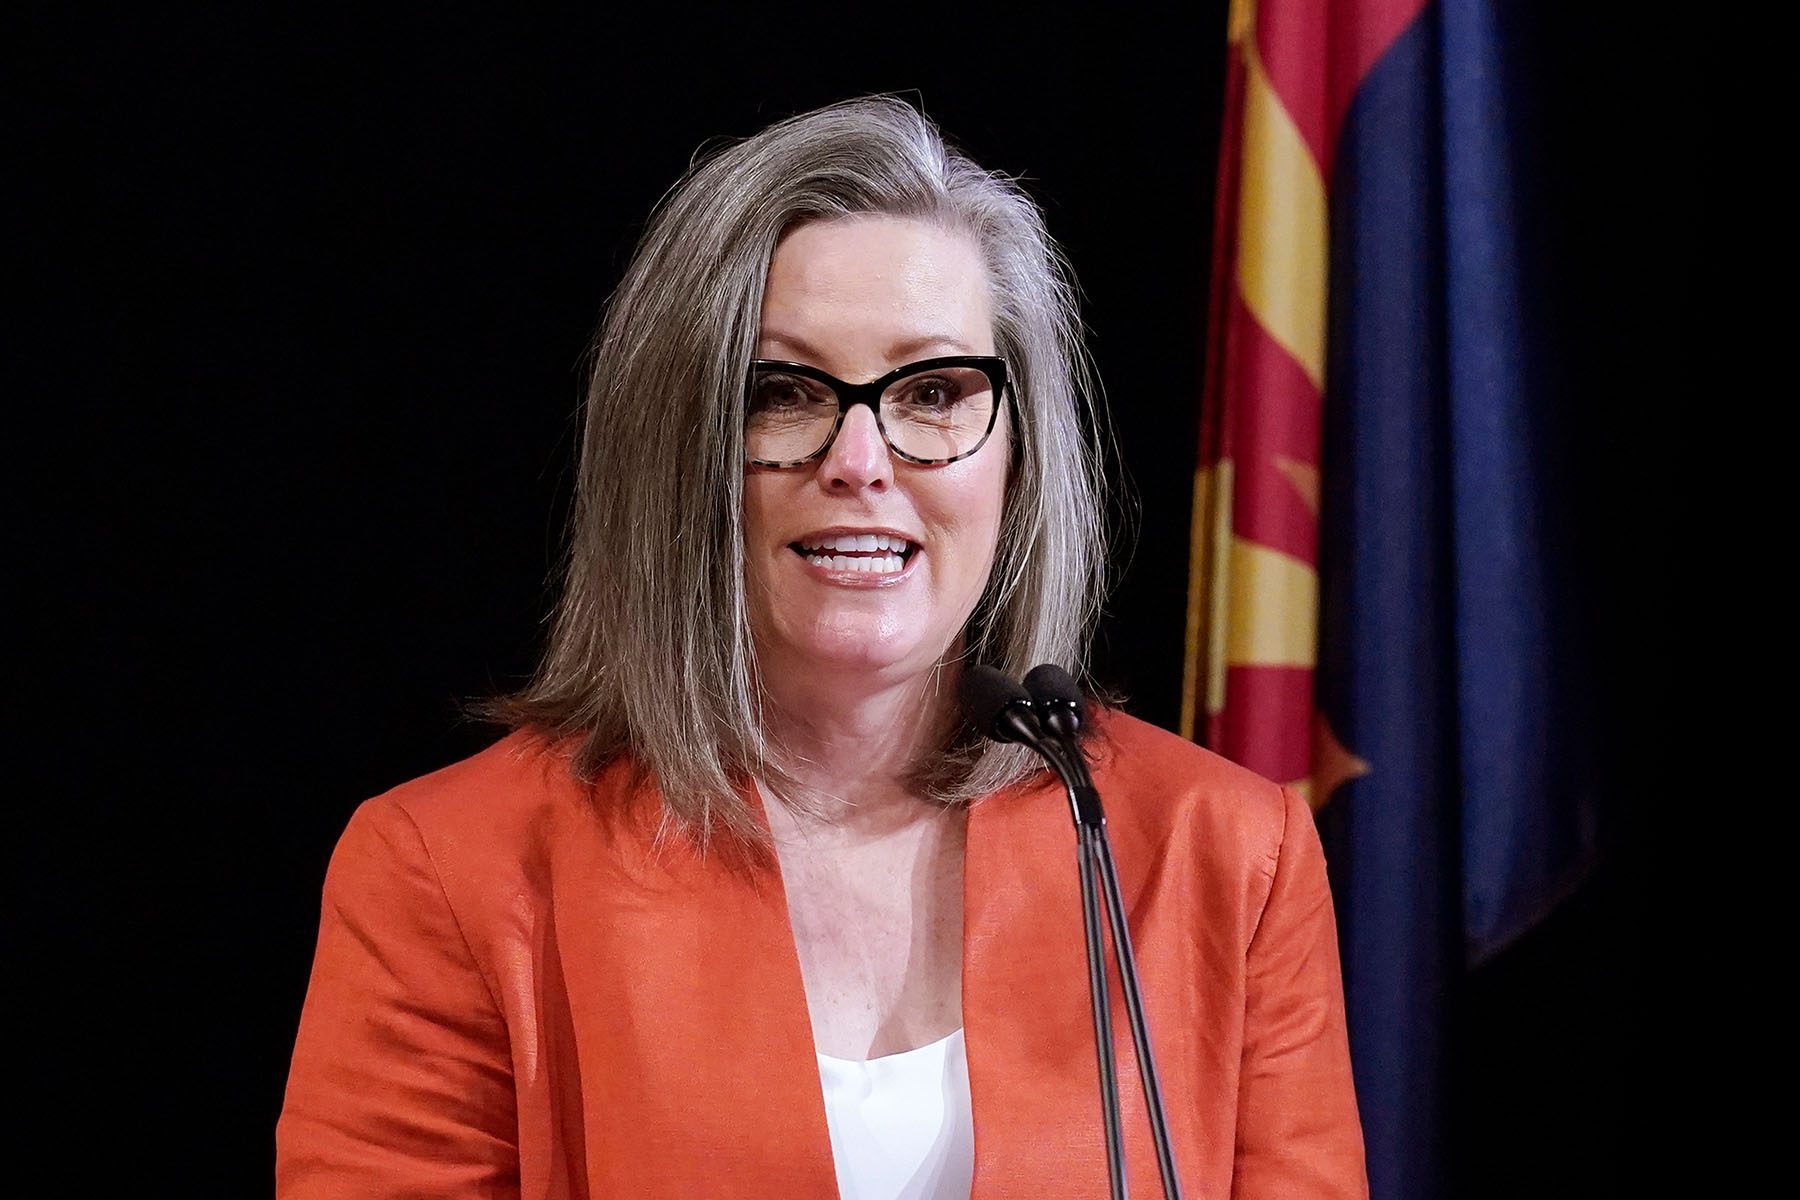 Katie Hobbs addresses the members of Arizona's Electoral College in Phoenix